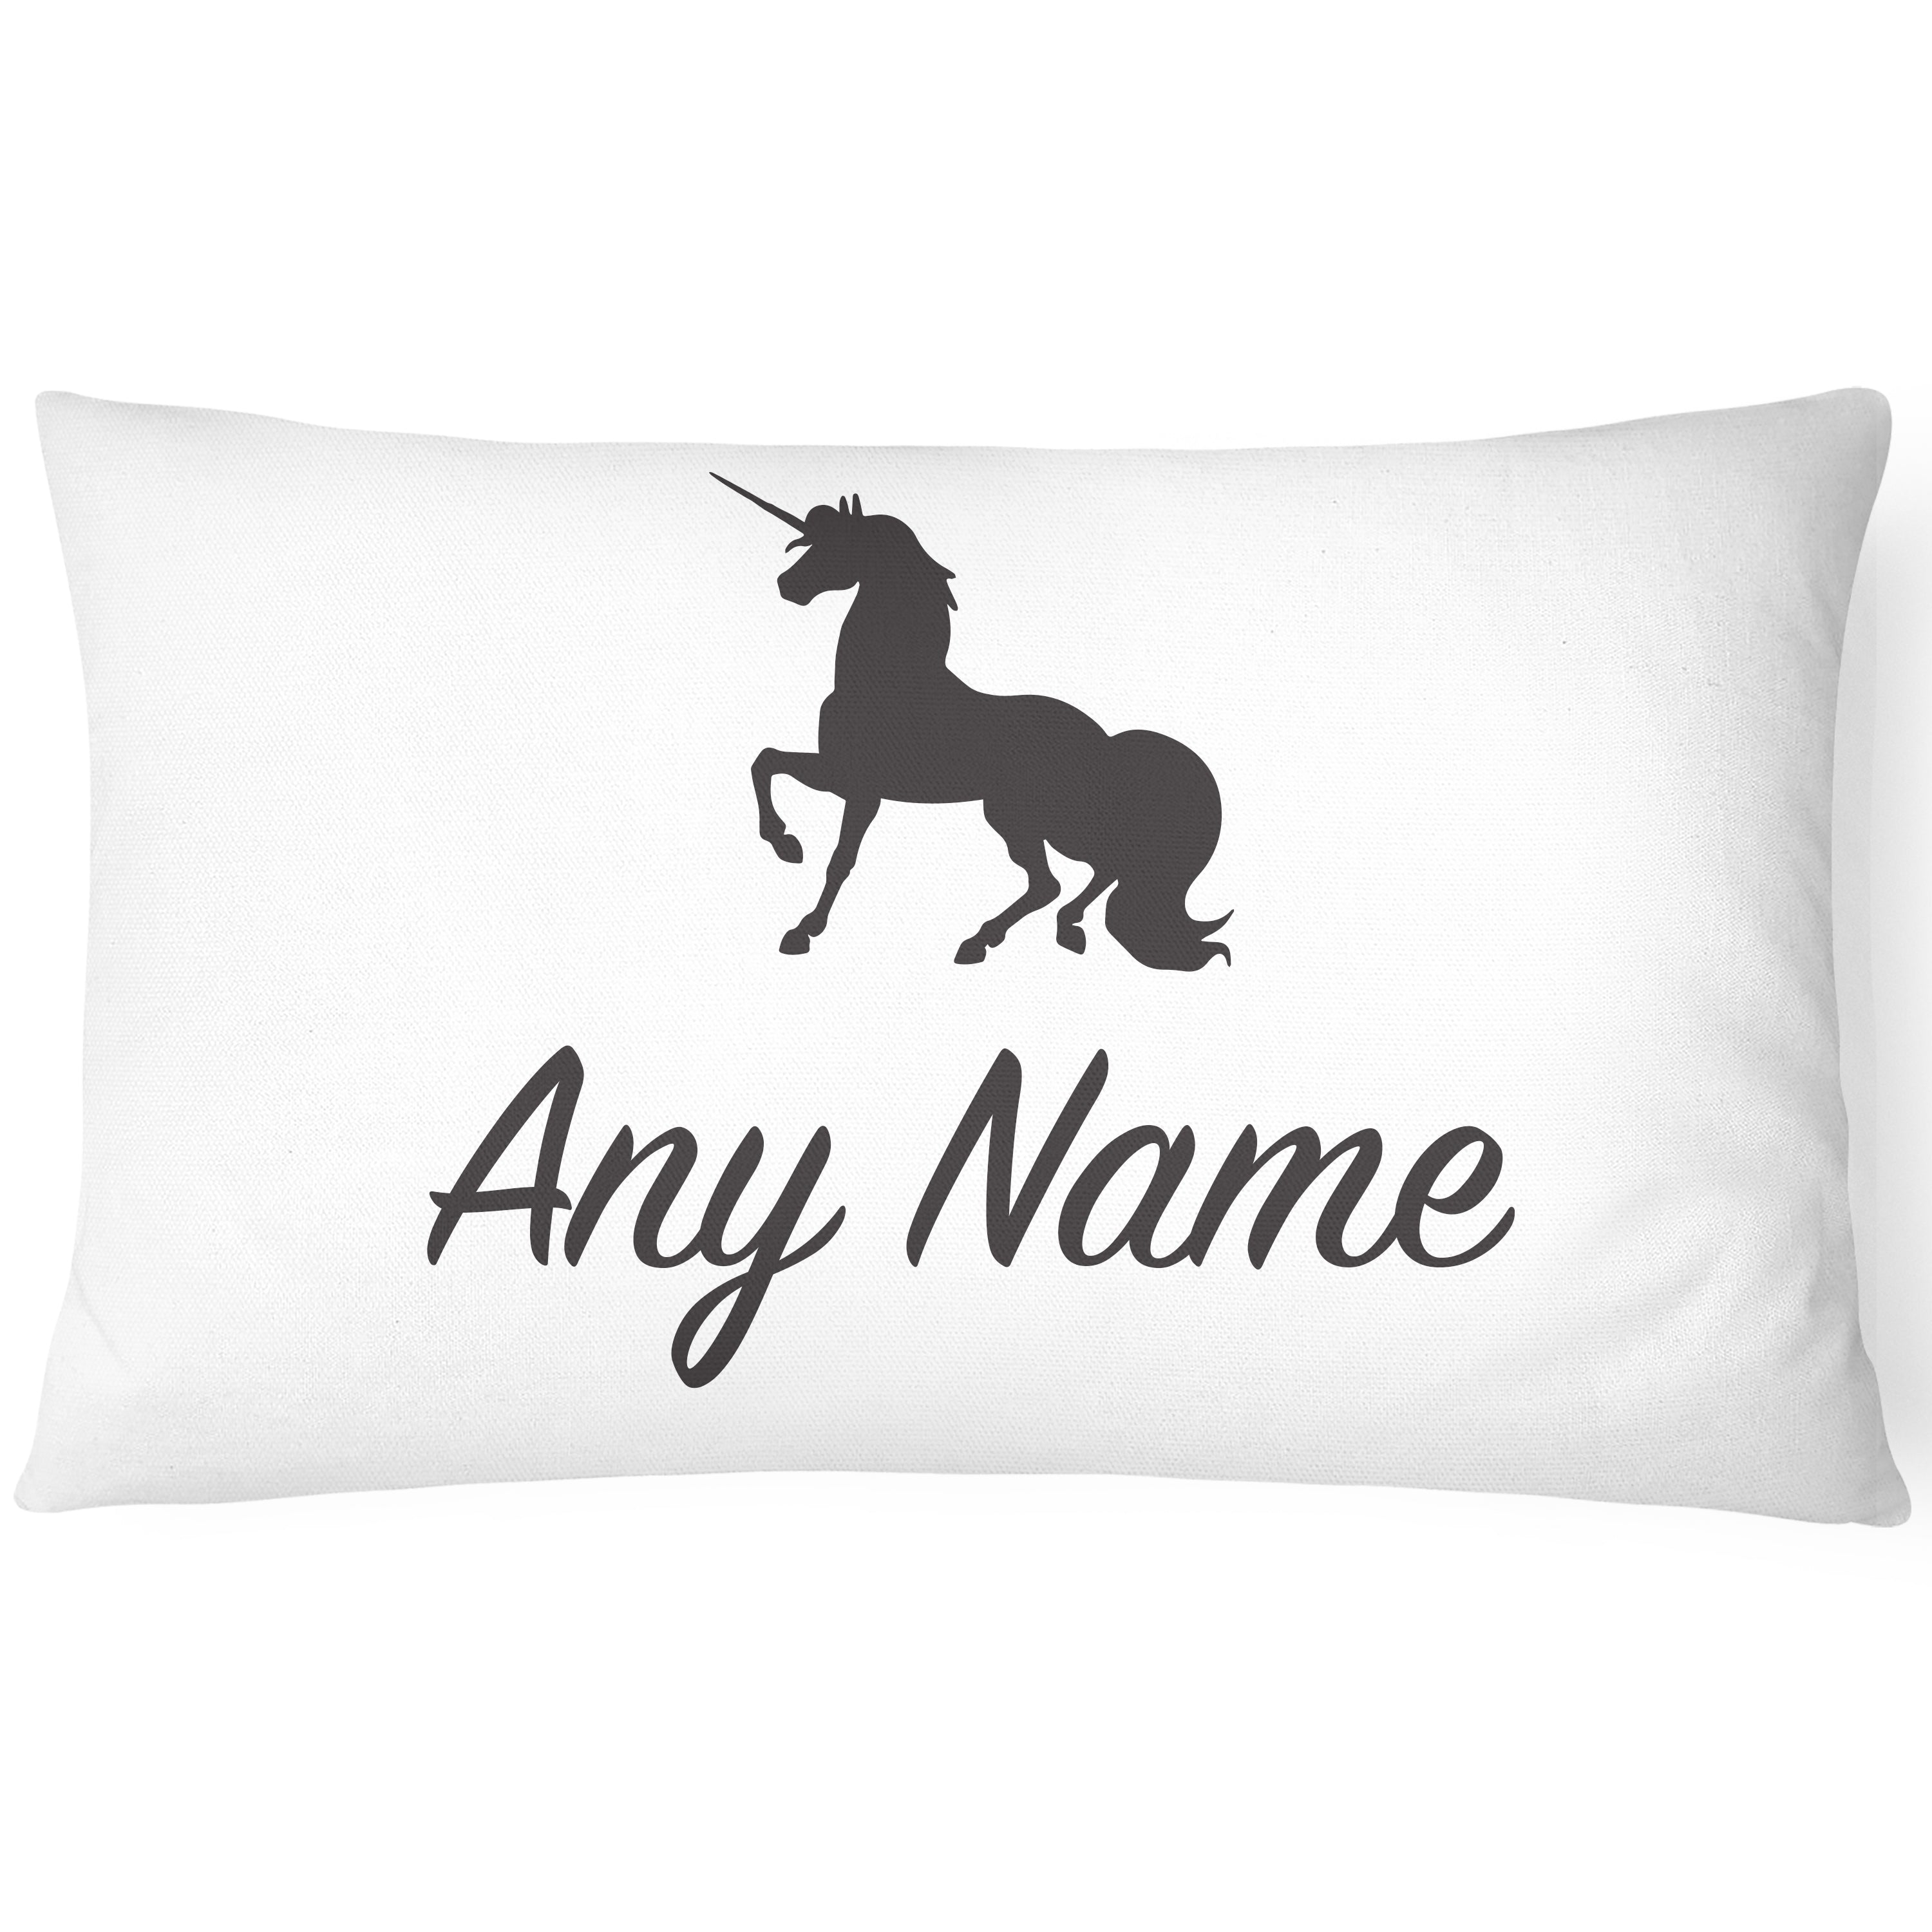 Unicorn Pillowcase Personalise - Perfect Gift - Any Name